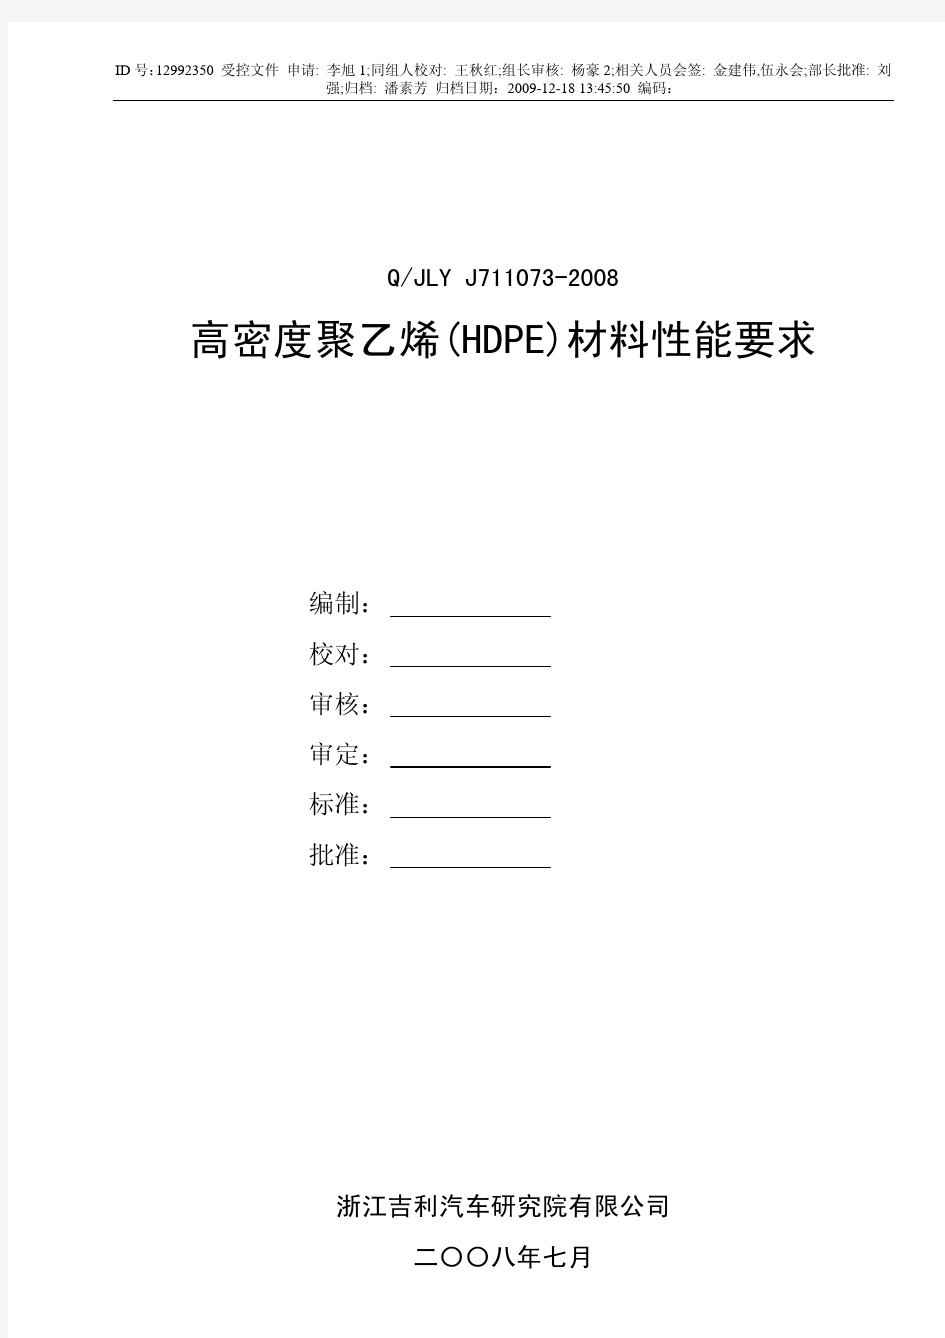 QJLY J711073-2008 高密度聚乙烯(HDPE)材料性能要求